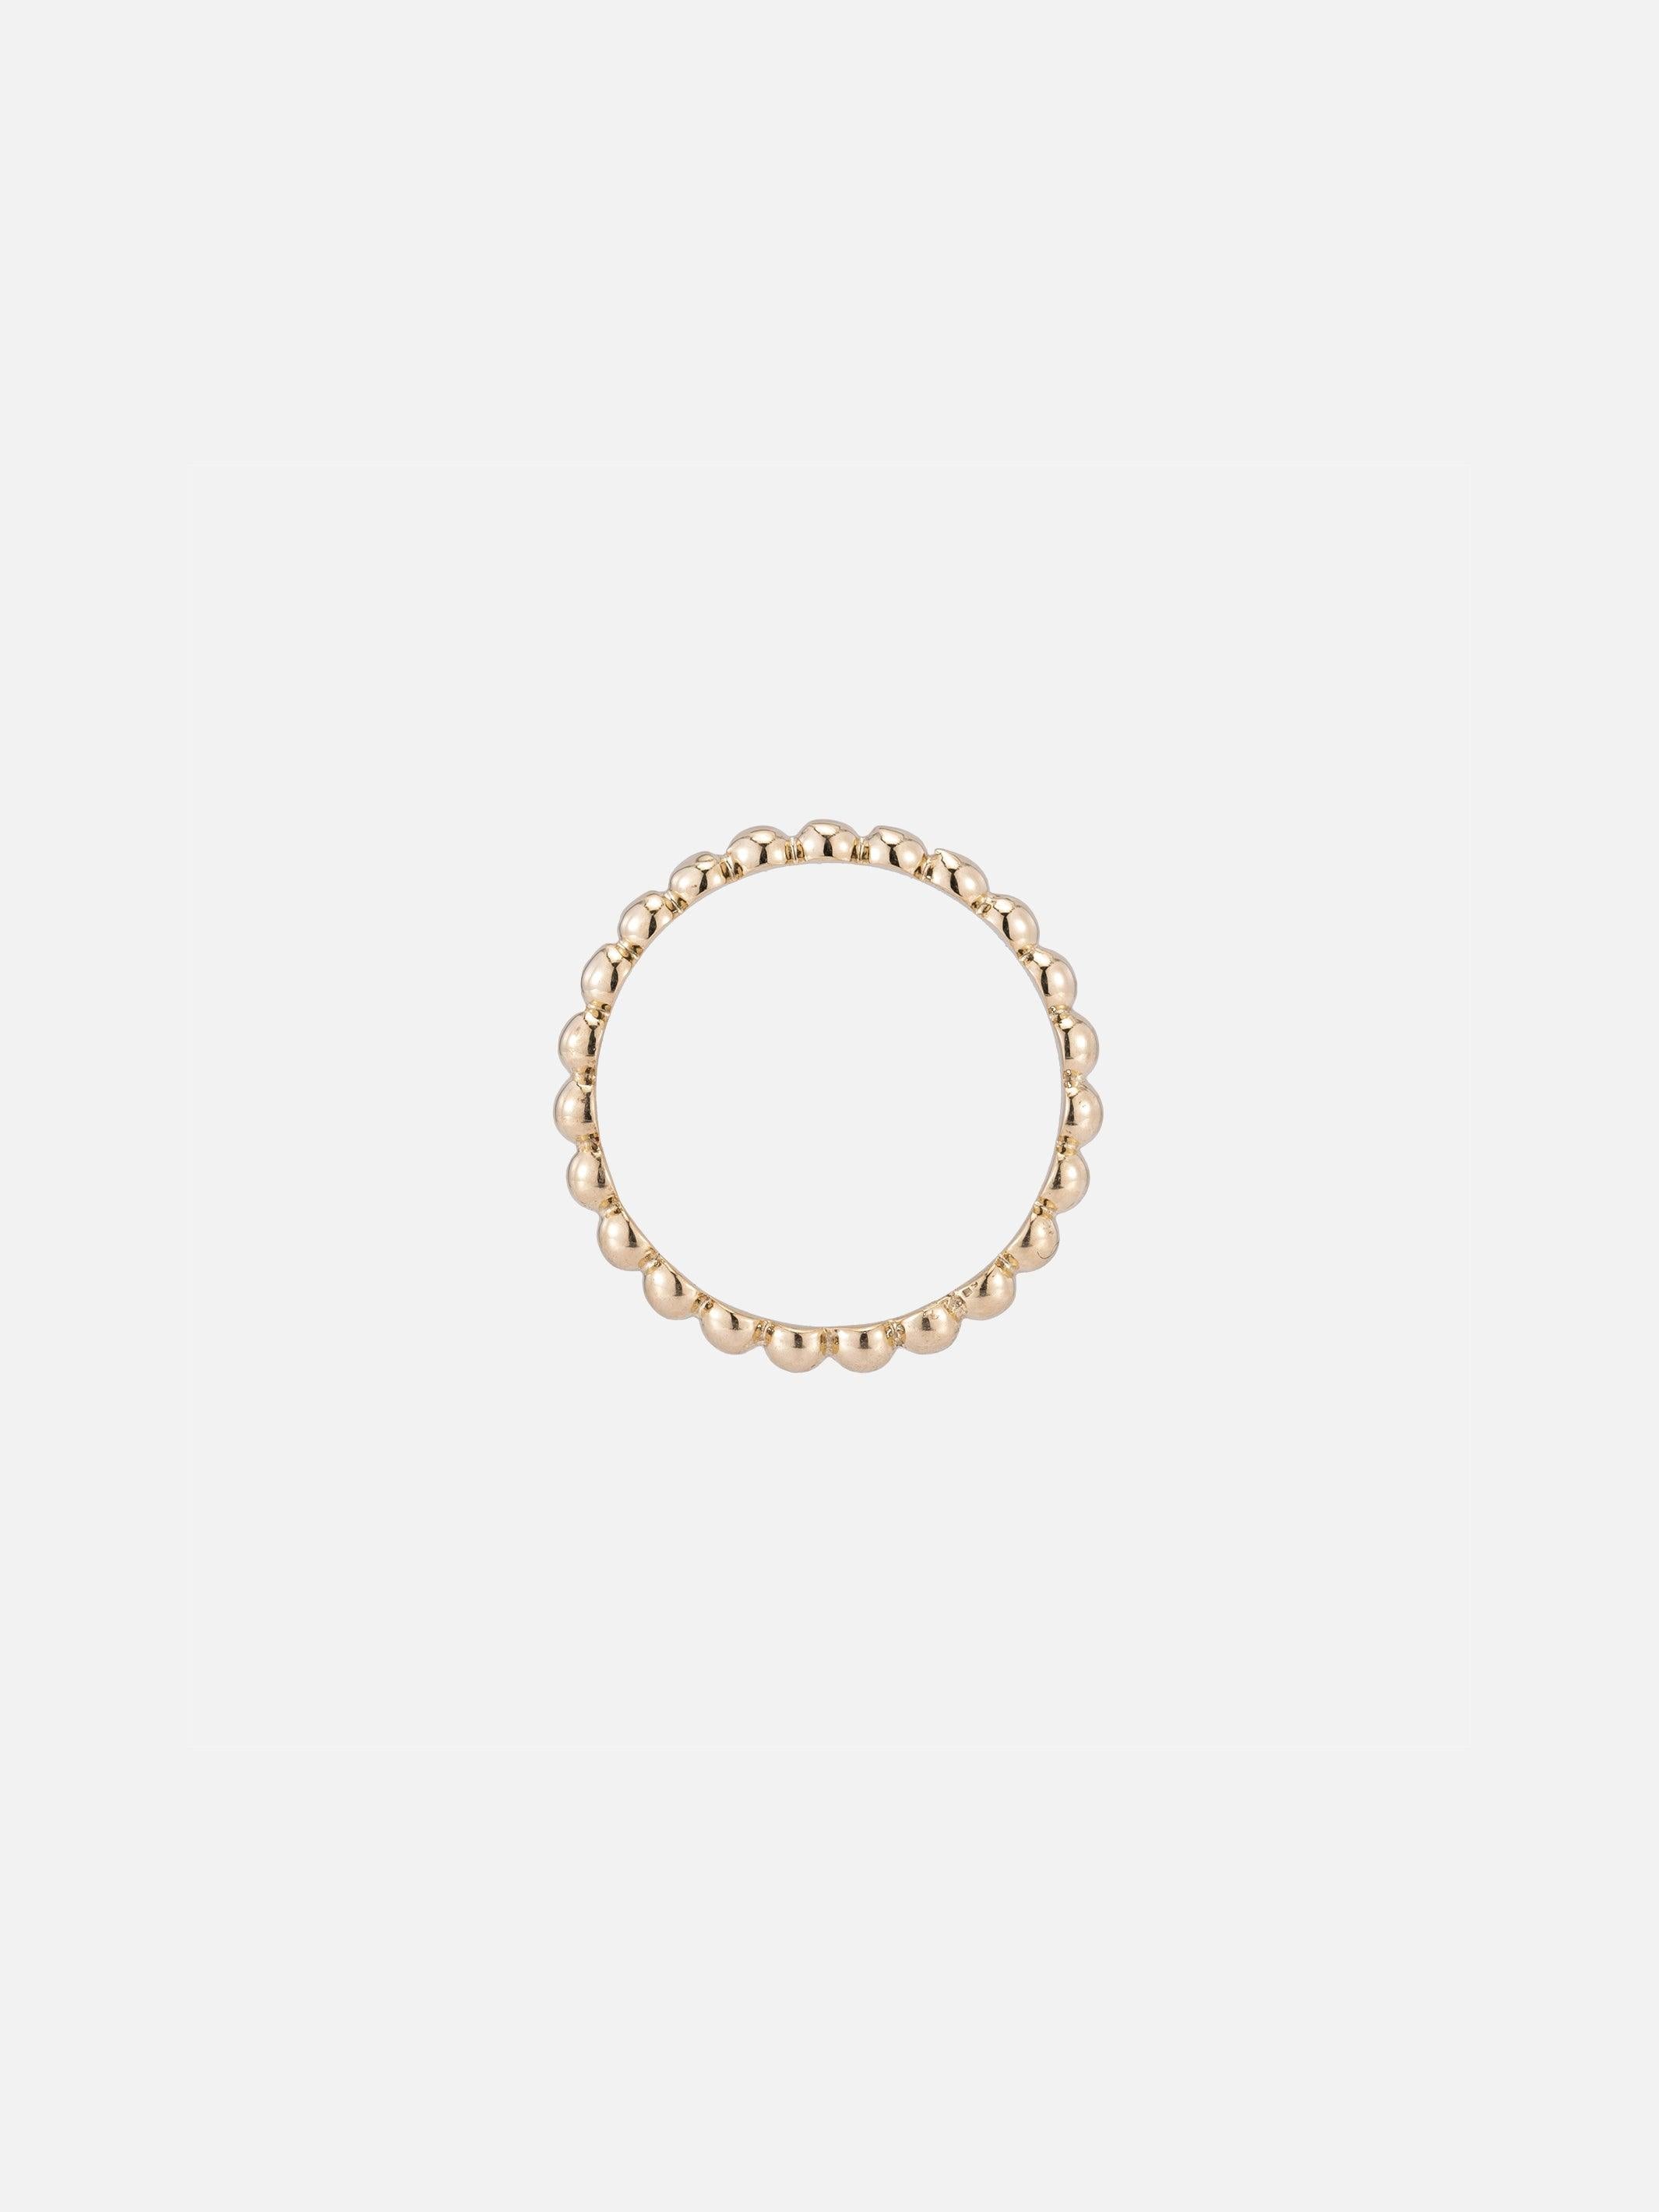 Junior Bubble Ring - Ariel Gordon Jewelry - At Present